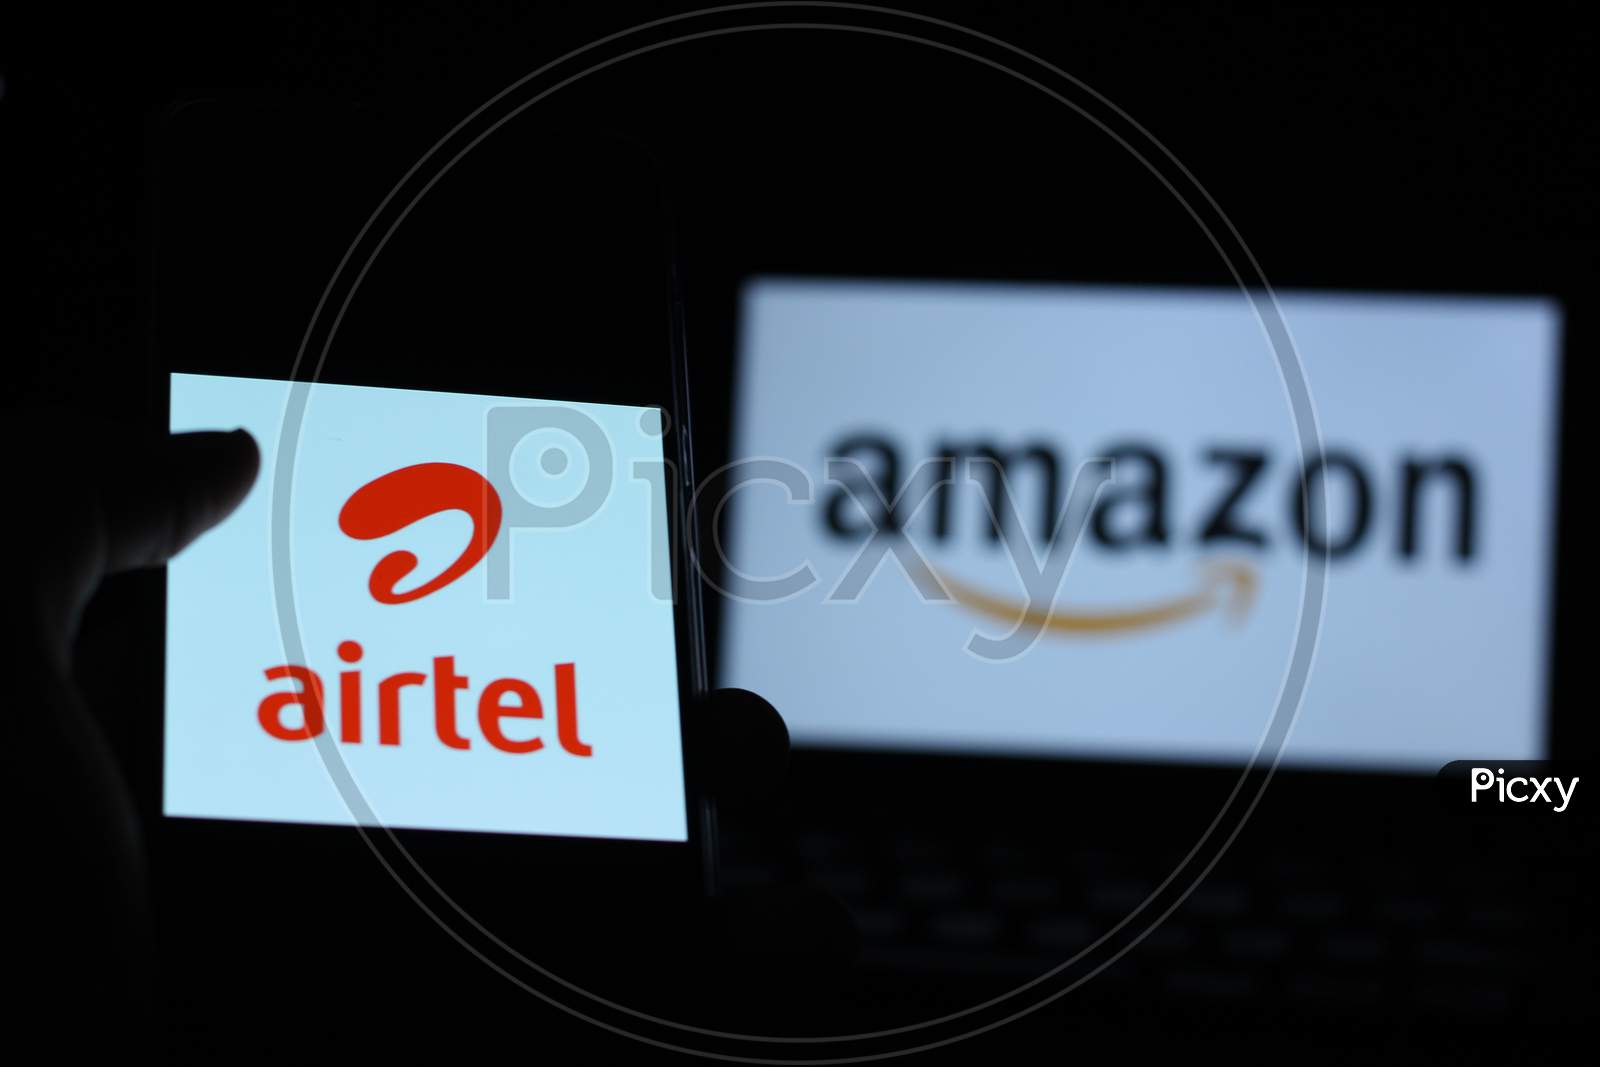 Bharti Airtel Logo with Amazon logo on background